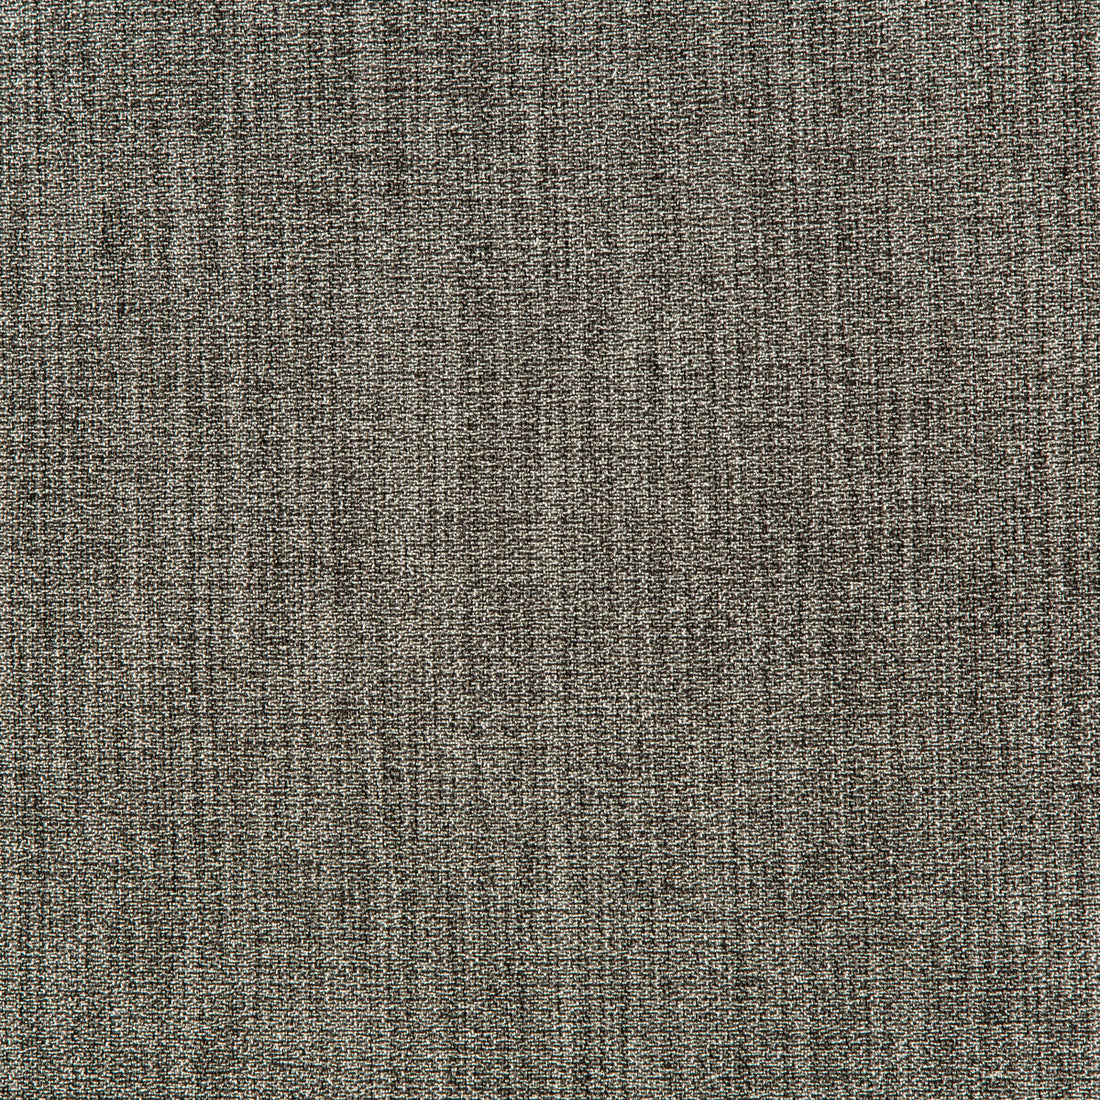 Kravet Smart fabric in 35942-21 color - pattern 35942.21.0 - by Kravet Smart in the Performance Kravetarmor collection